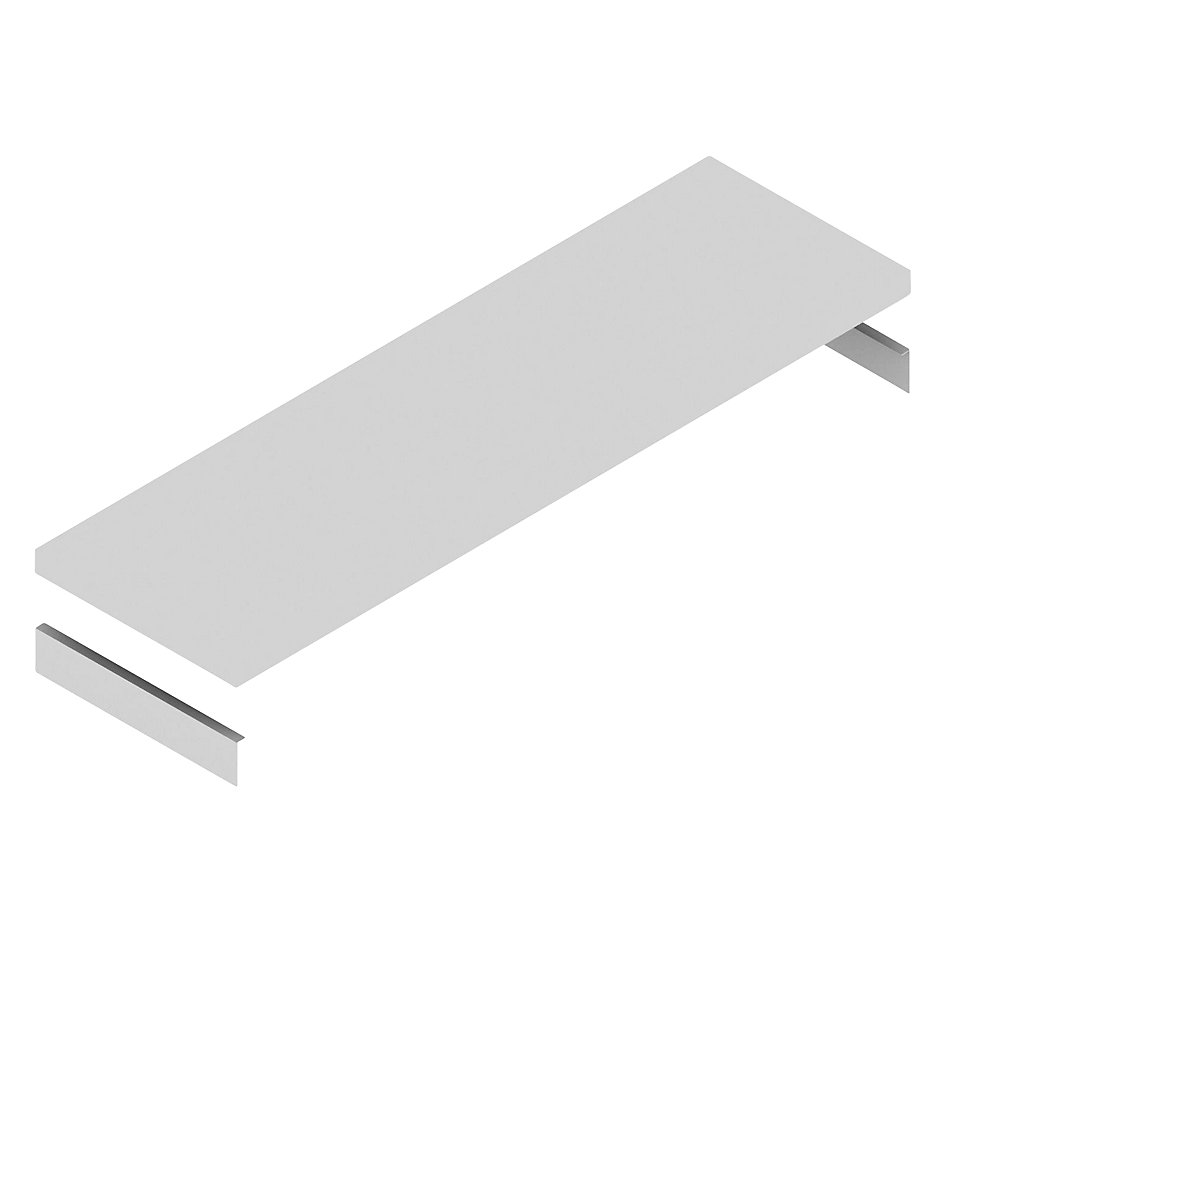 Shelf, incl. support beams – hofe, zinc plated, WxD 1325 x 400 mm